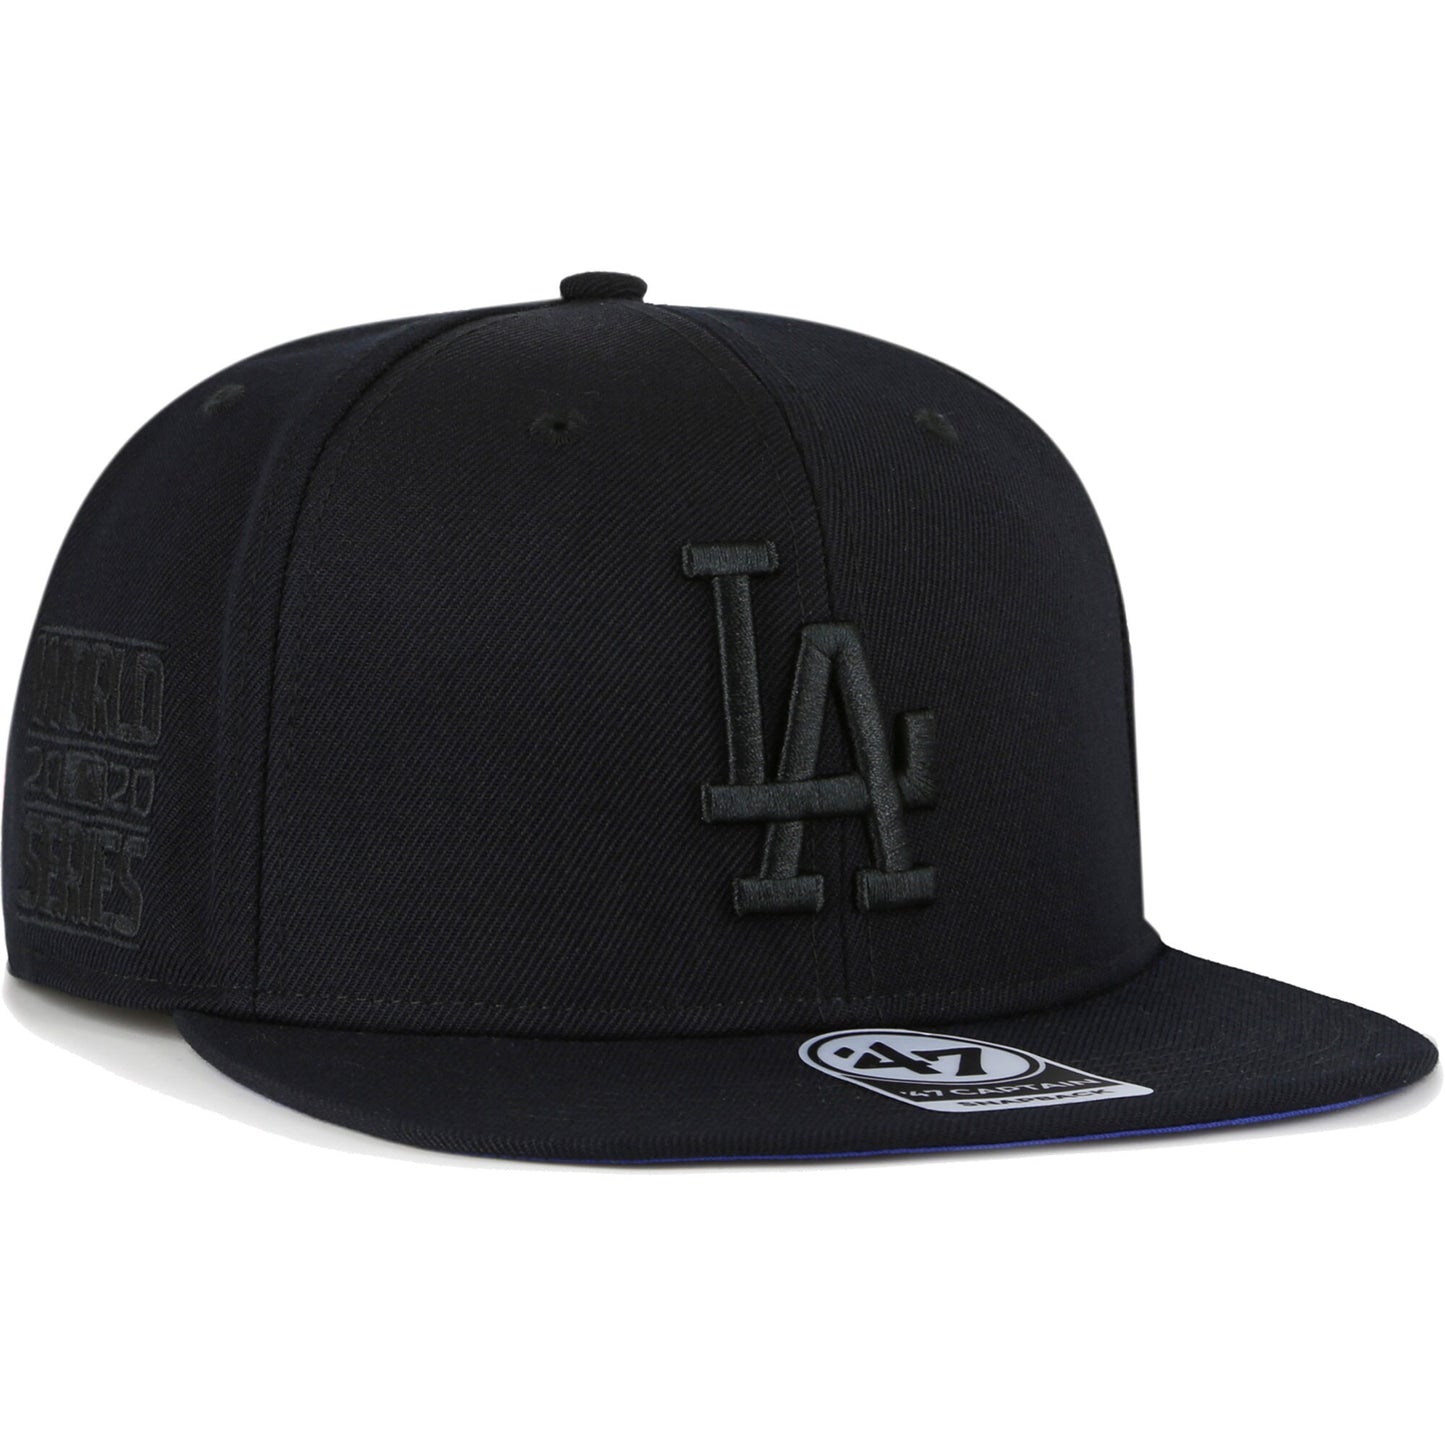 Los Angeles Dodgers '47 Black on Black Sure Shot Captain Snapback Hat